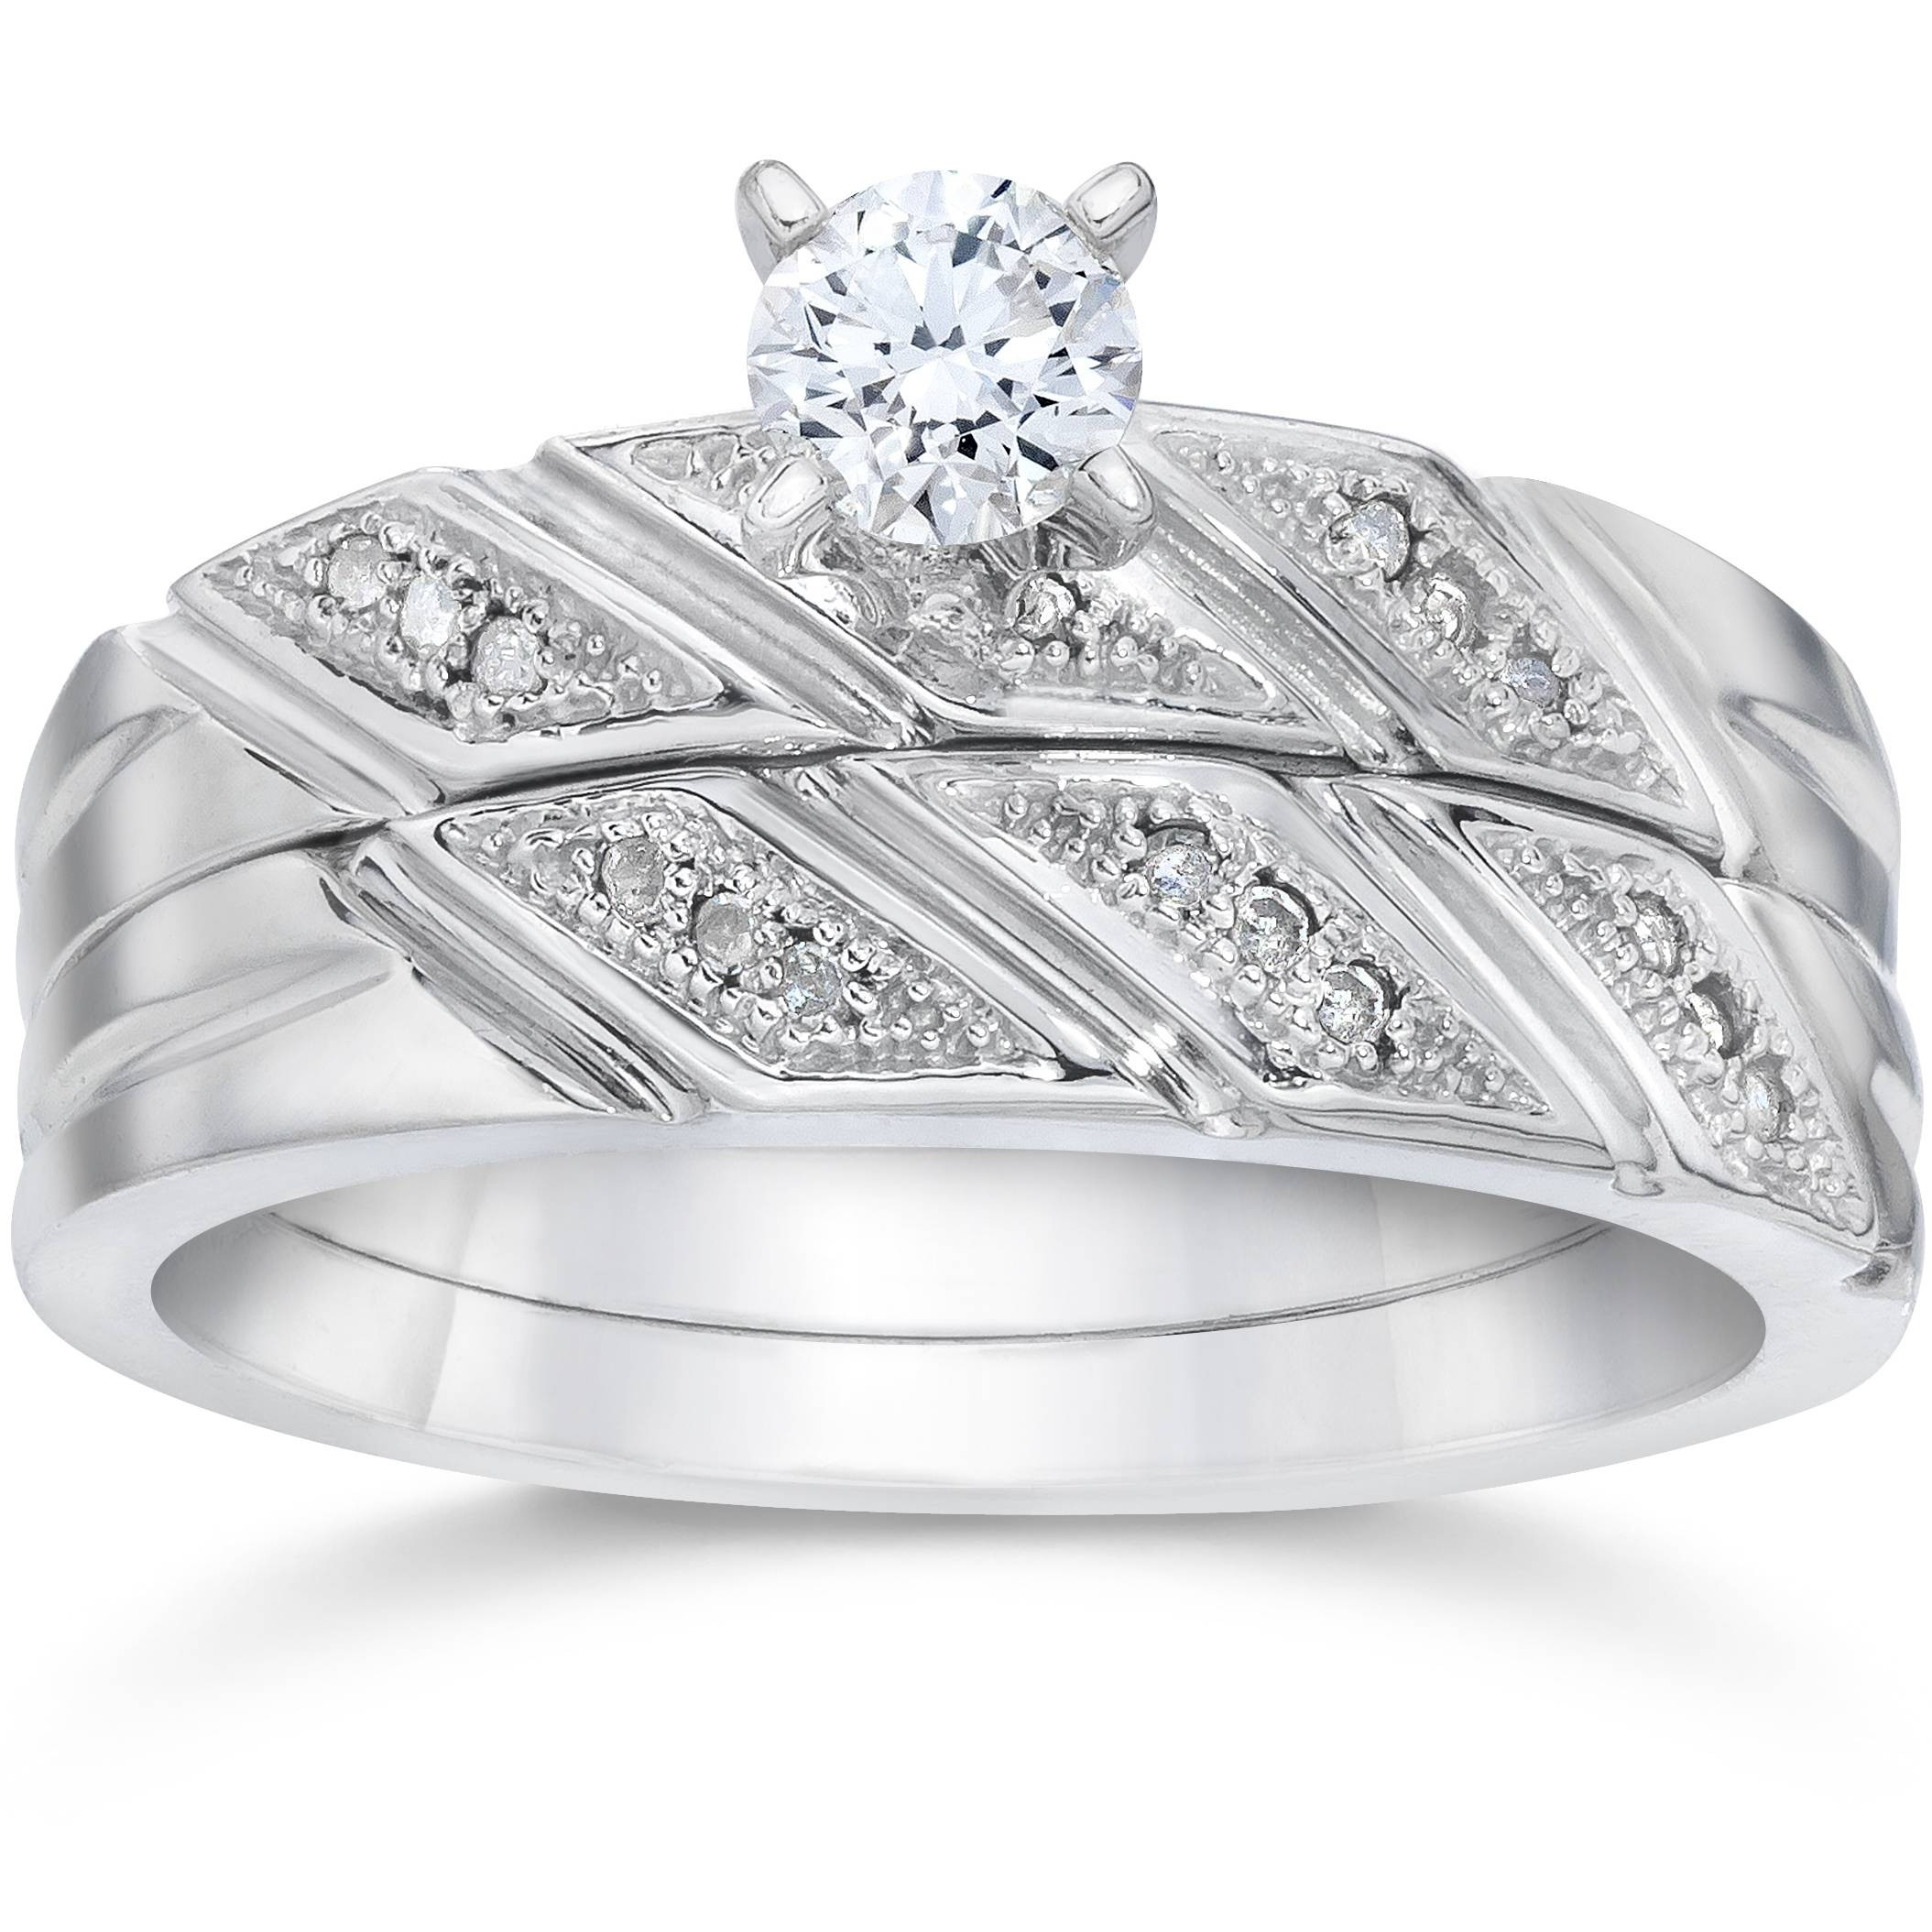 5ct Diamond Engagement Rings
 1 5ct Diamond Engagement Ring Matching Wedding Band Set